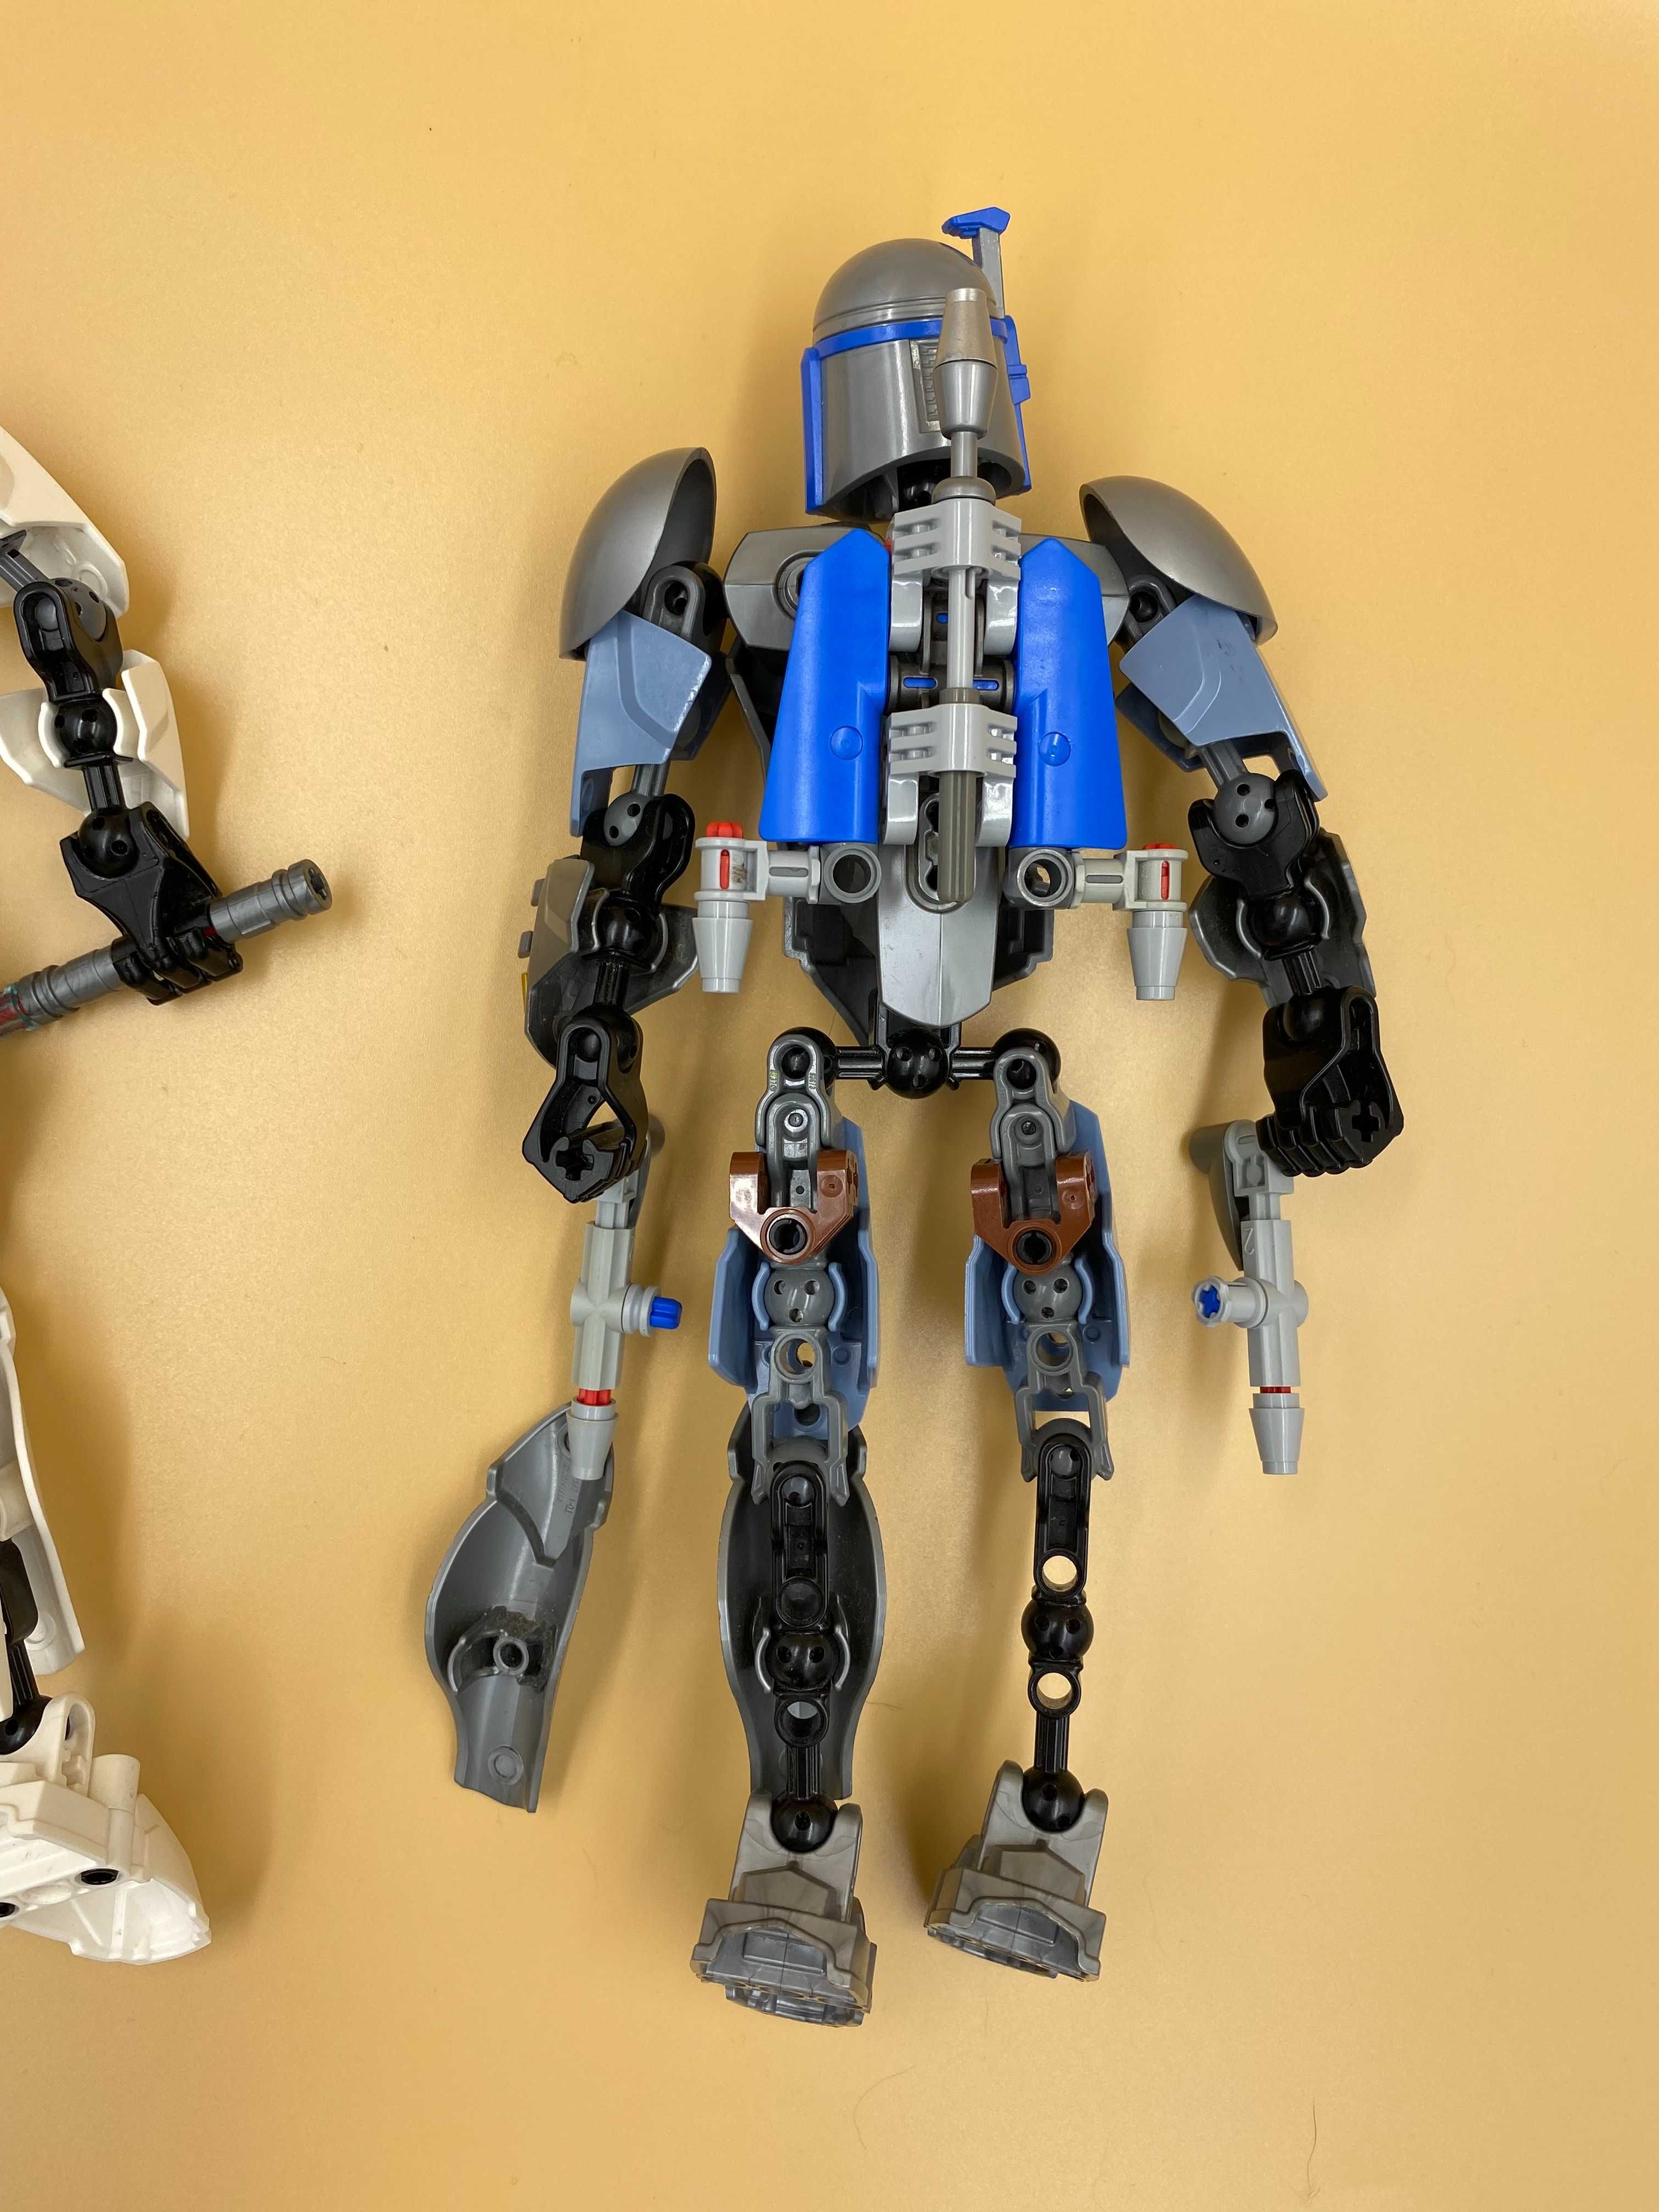 Klocki Lego Star Wars 75109 Obi-Wan Kenobi, 750107 Jango Fett